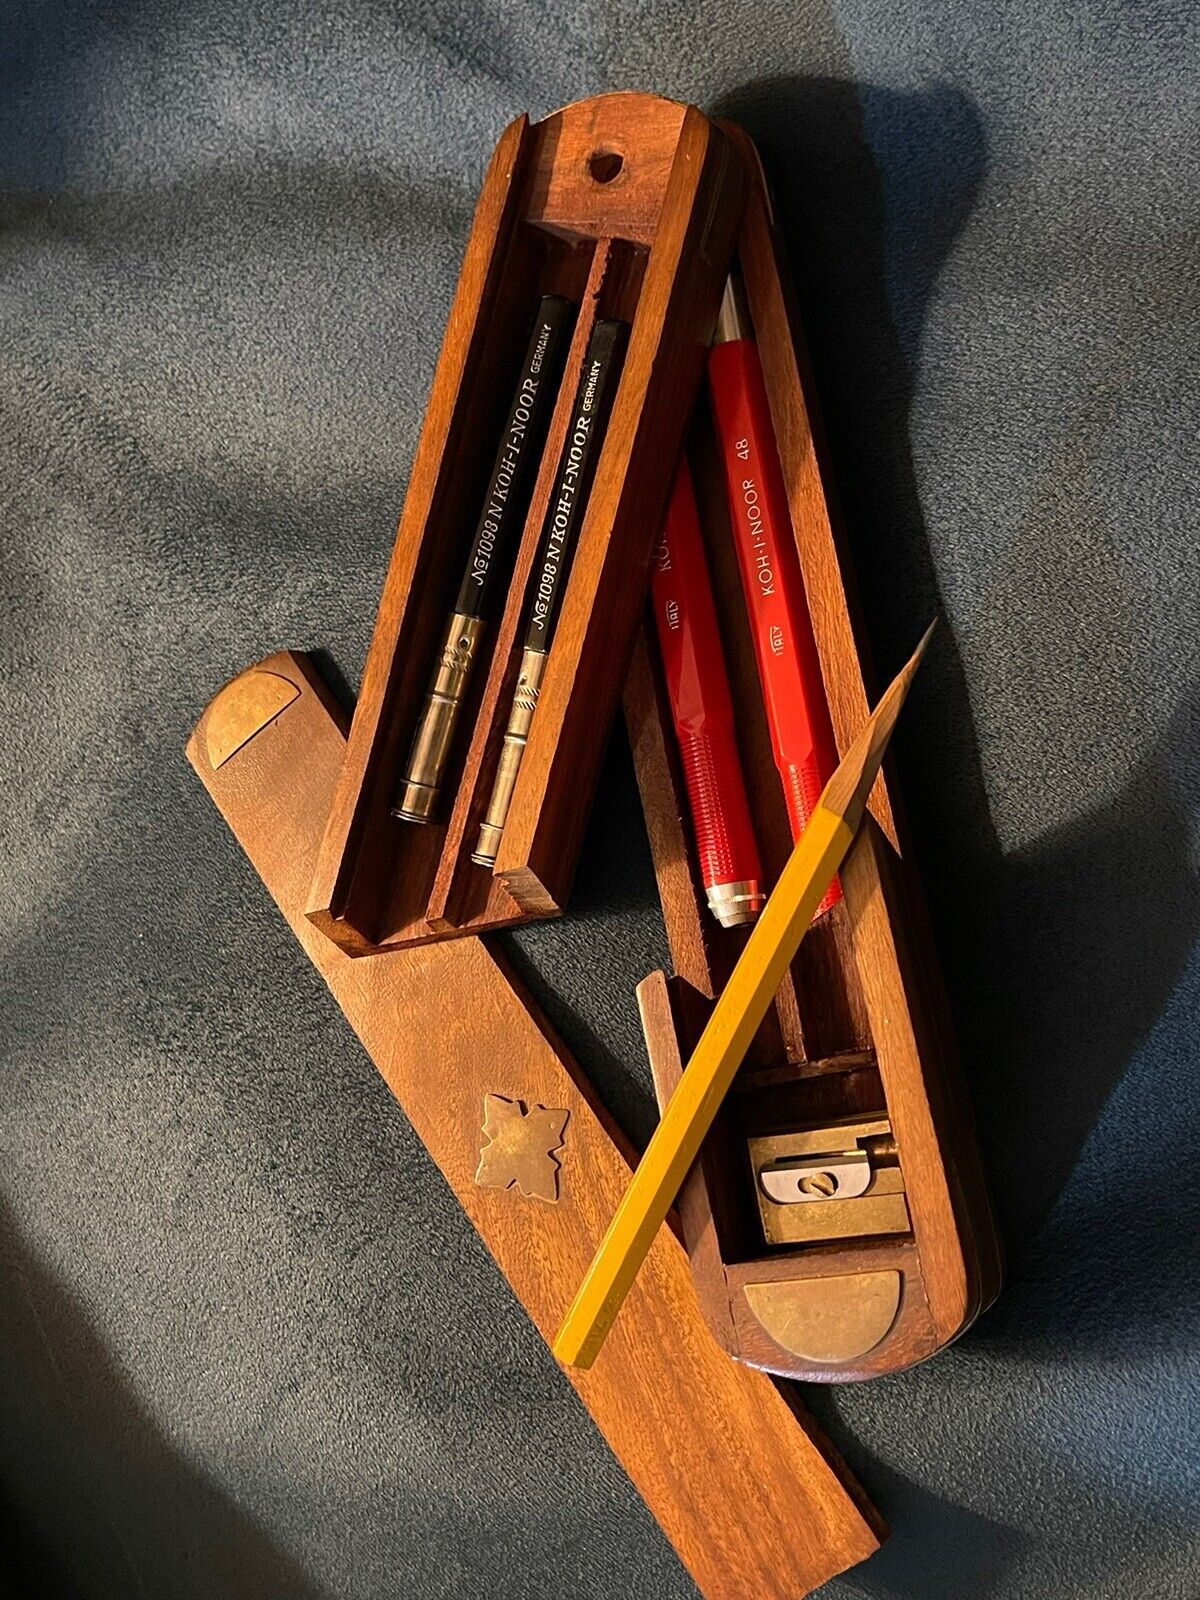 Koh-I-Noor Hardtmuth Vintage Pencil Extender Leadholder Brass Box & Sharpener